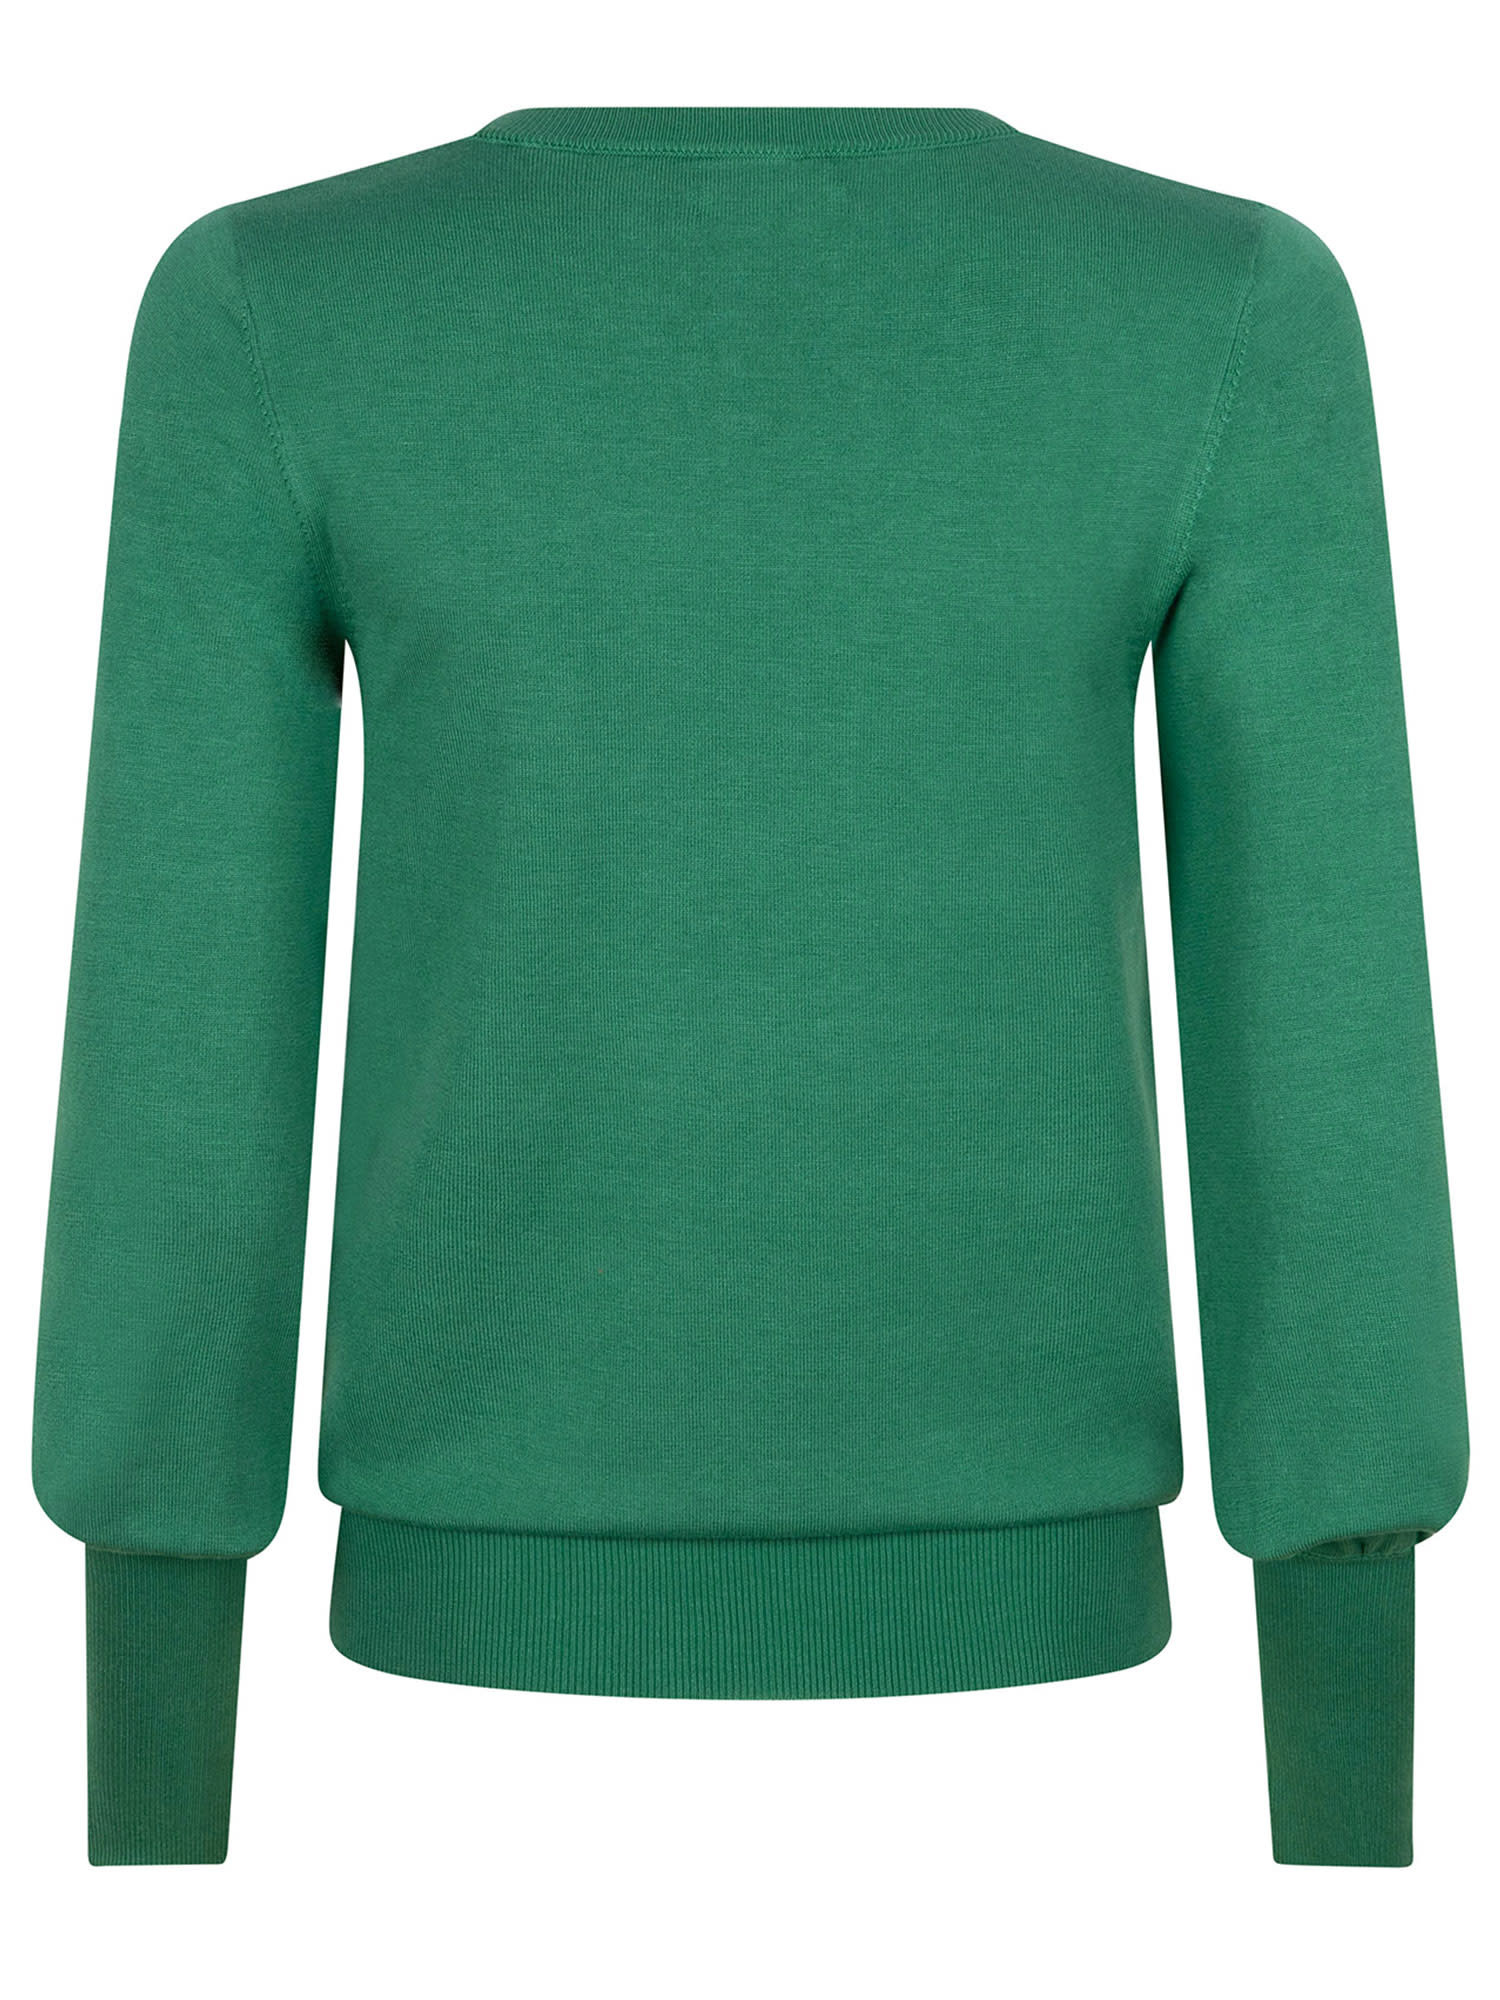 Vera fine round neck knit Emerald-2